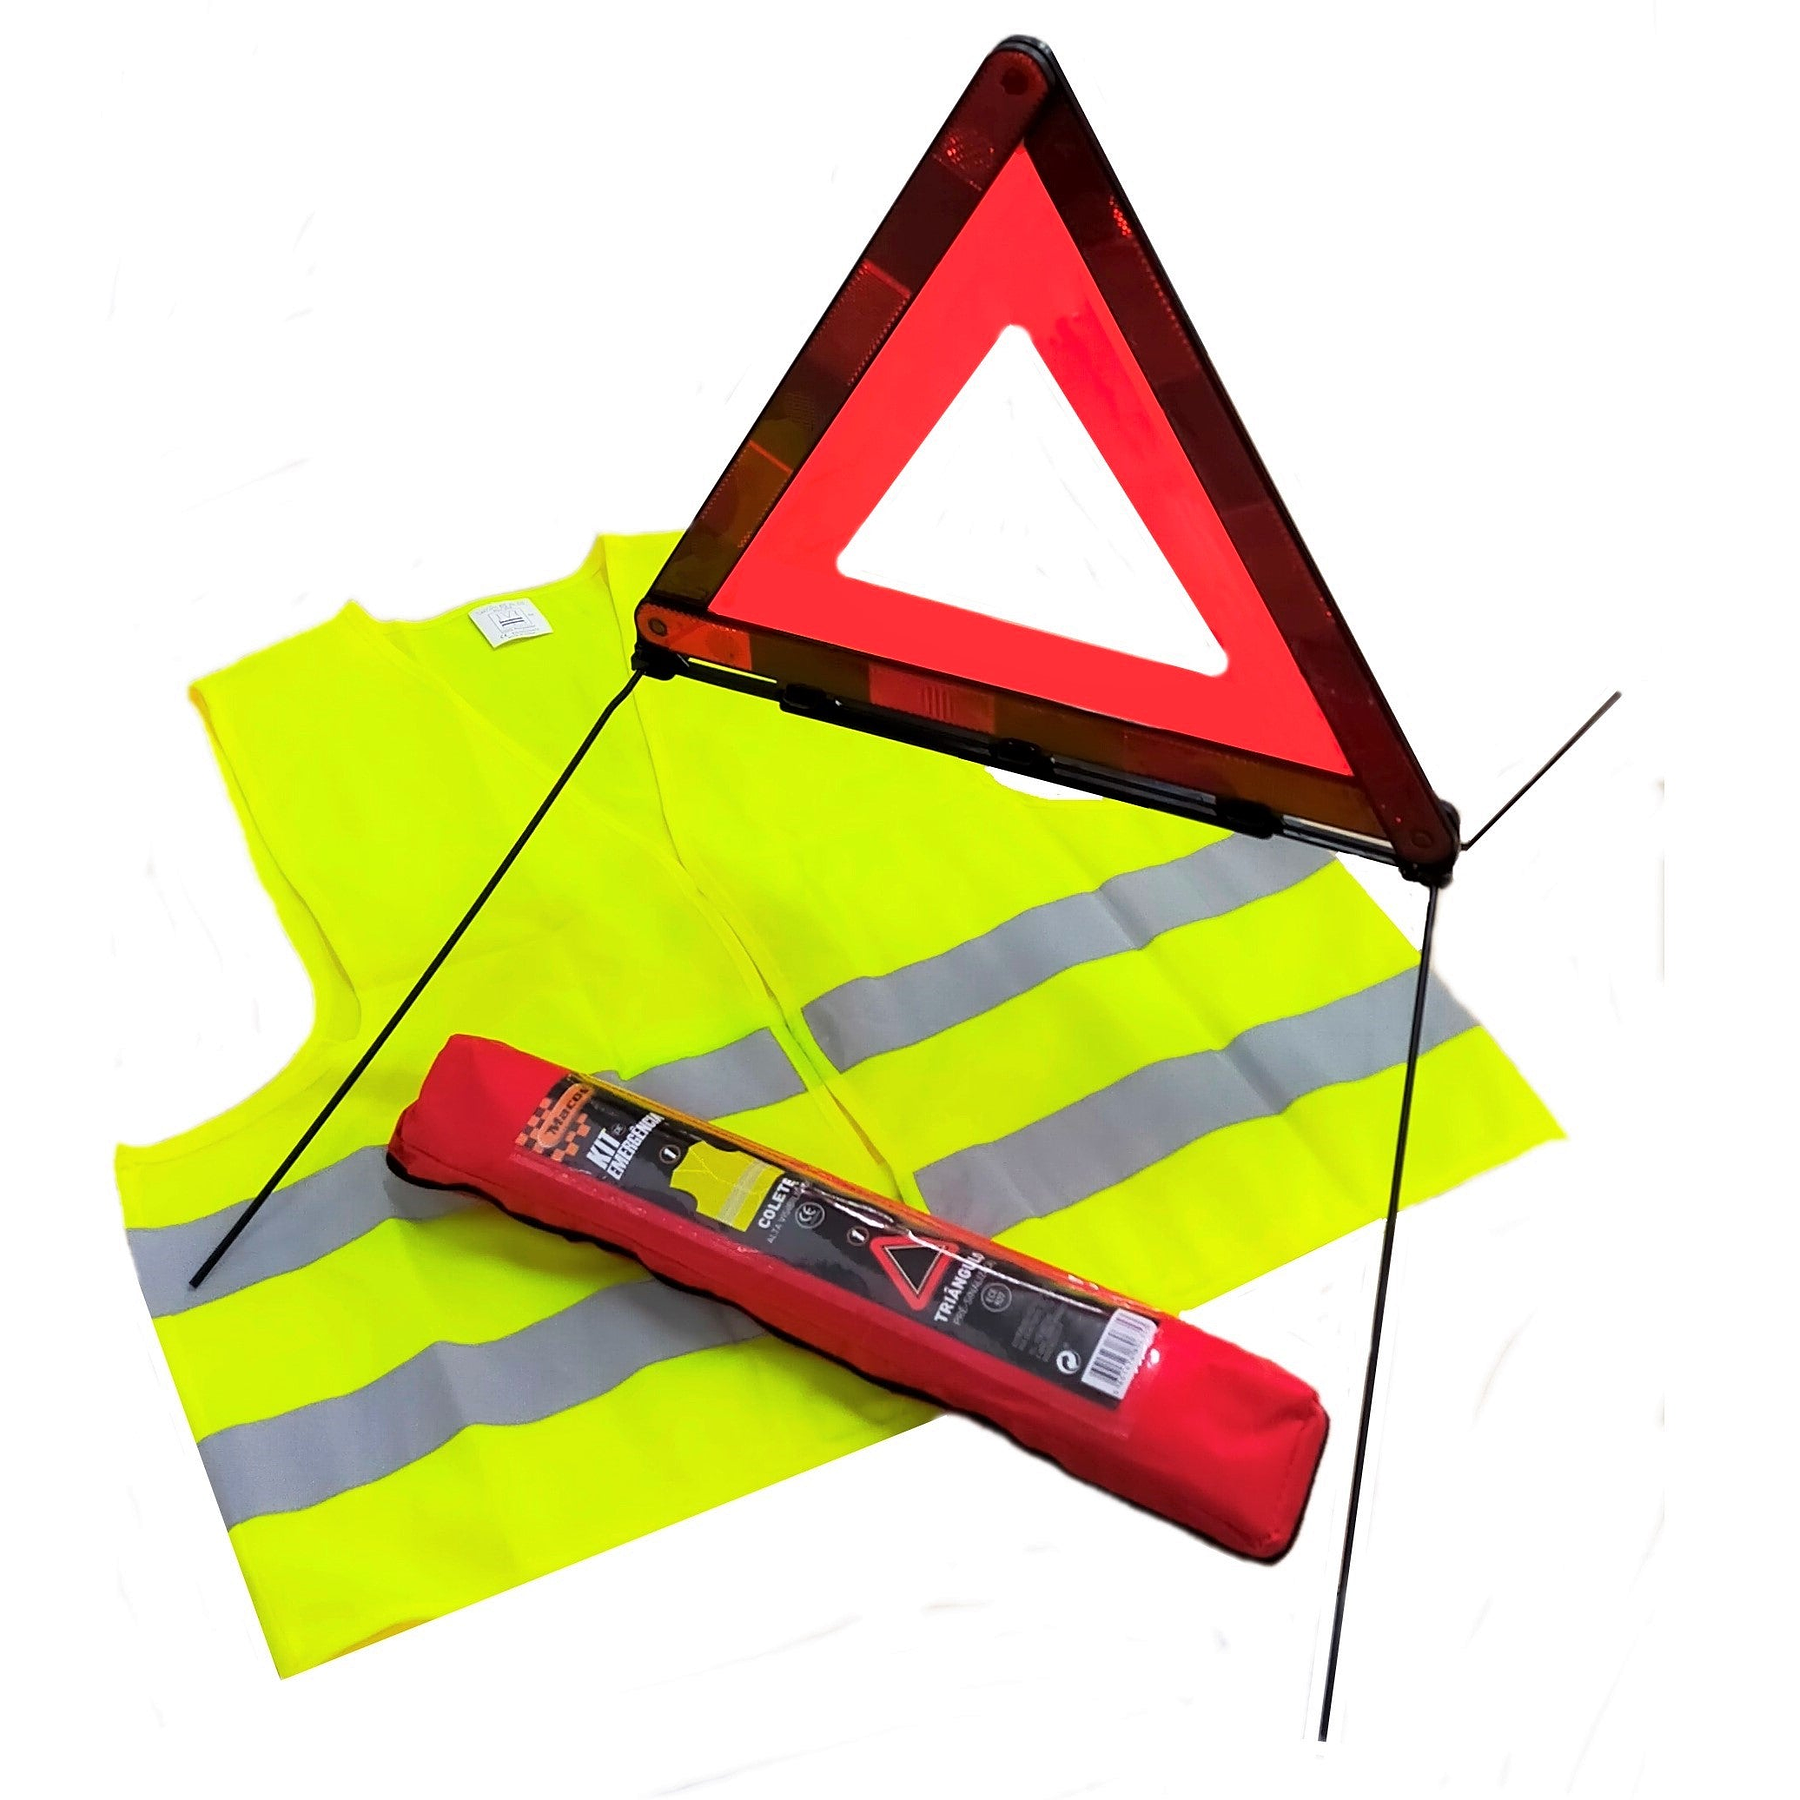 Kit Emergência: Colete + Triângulo Pré-sinalização